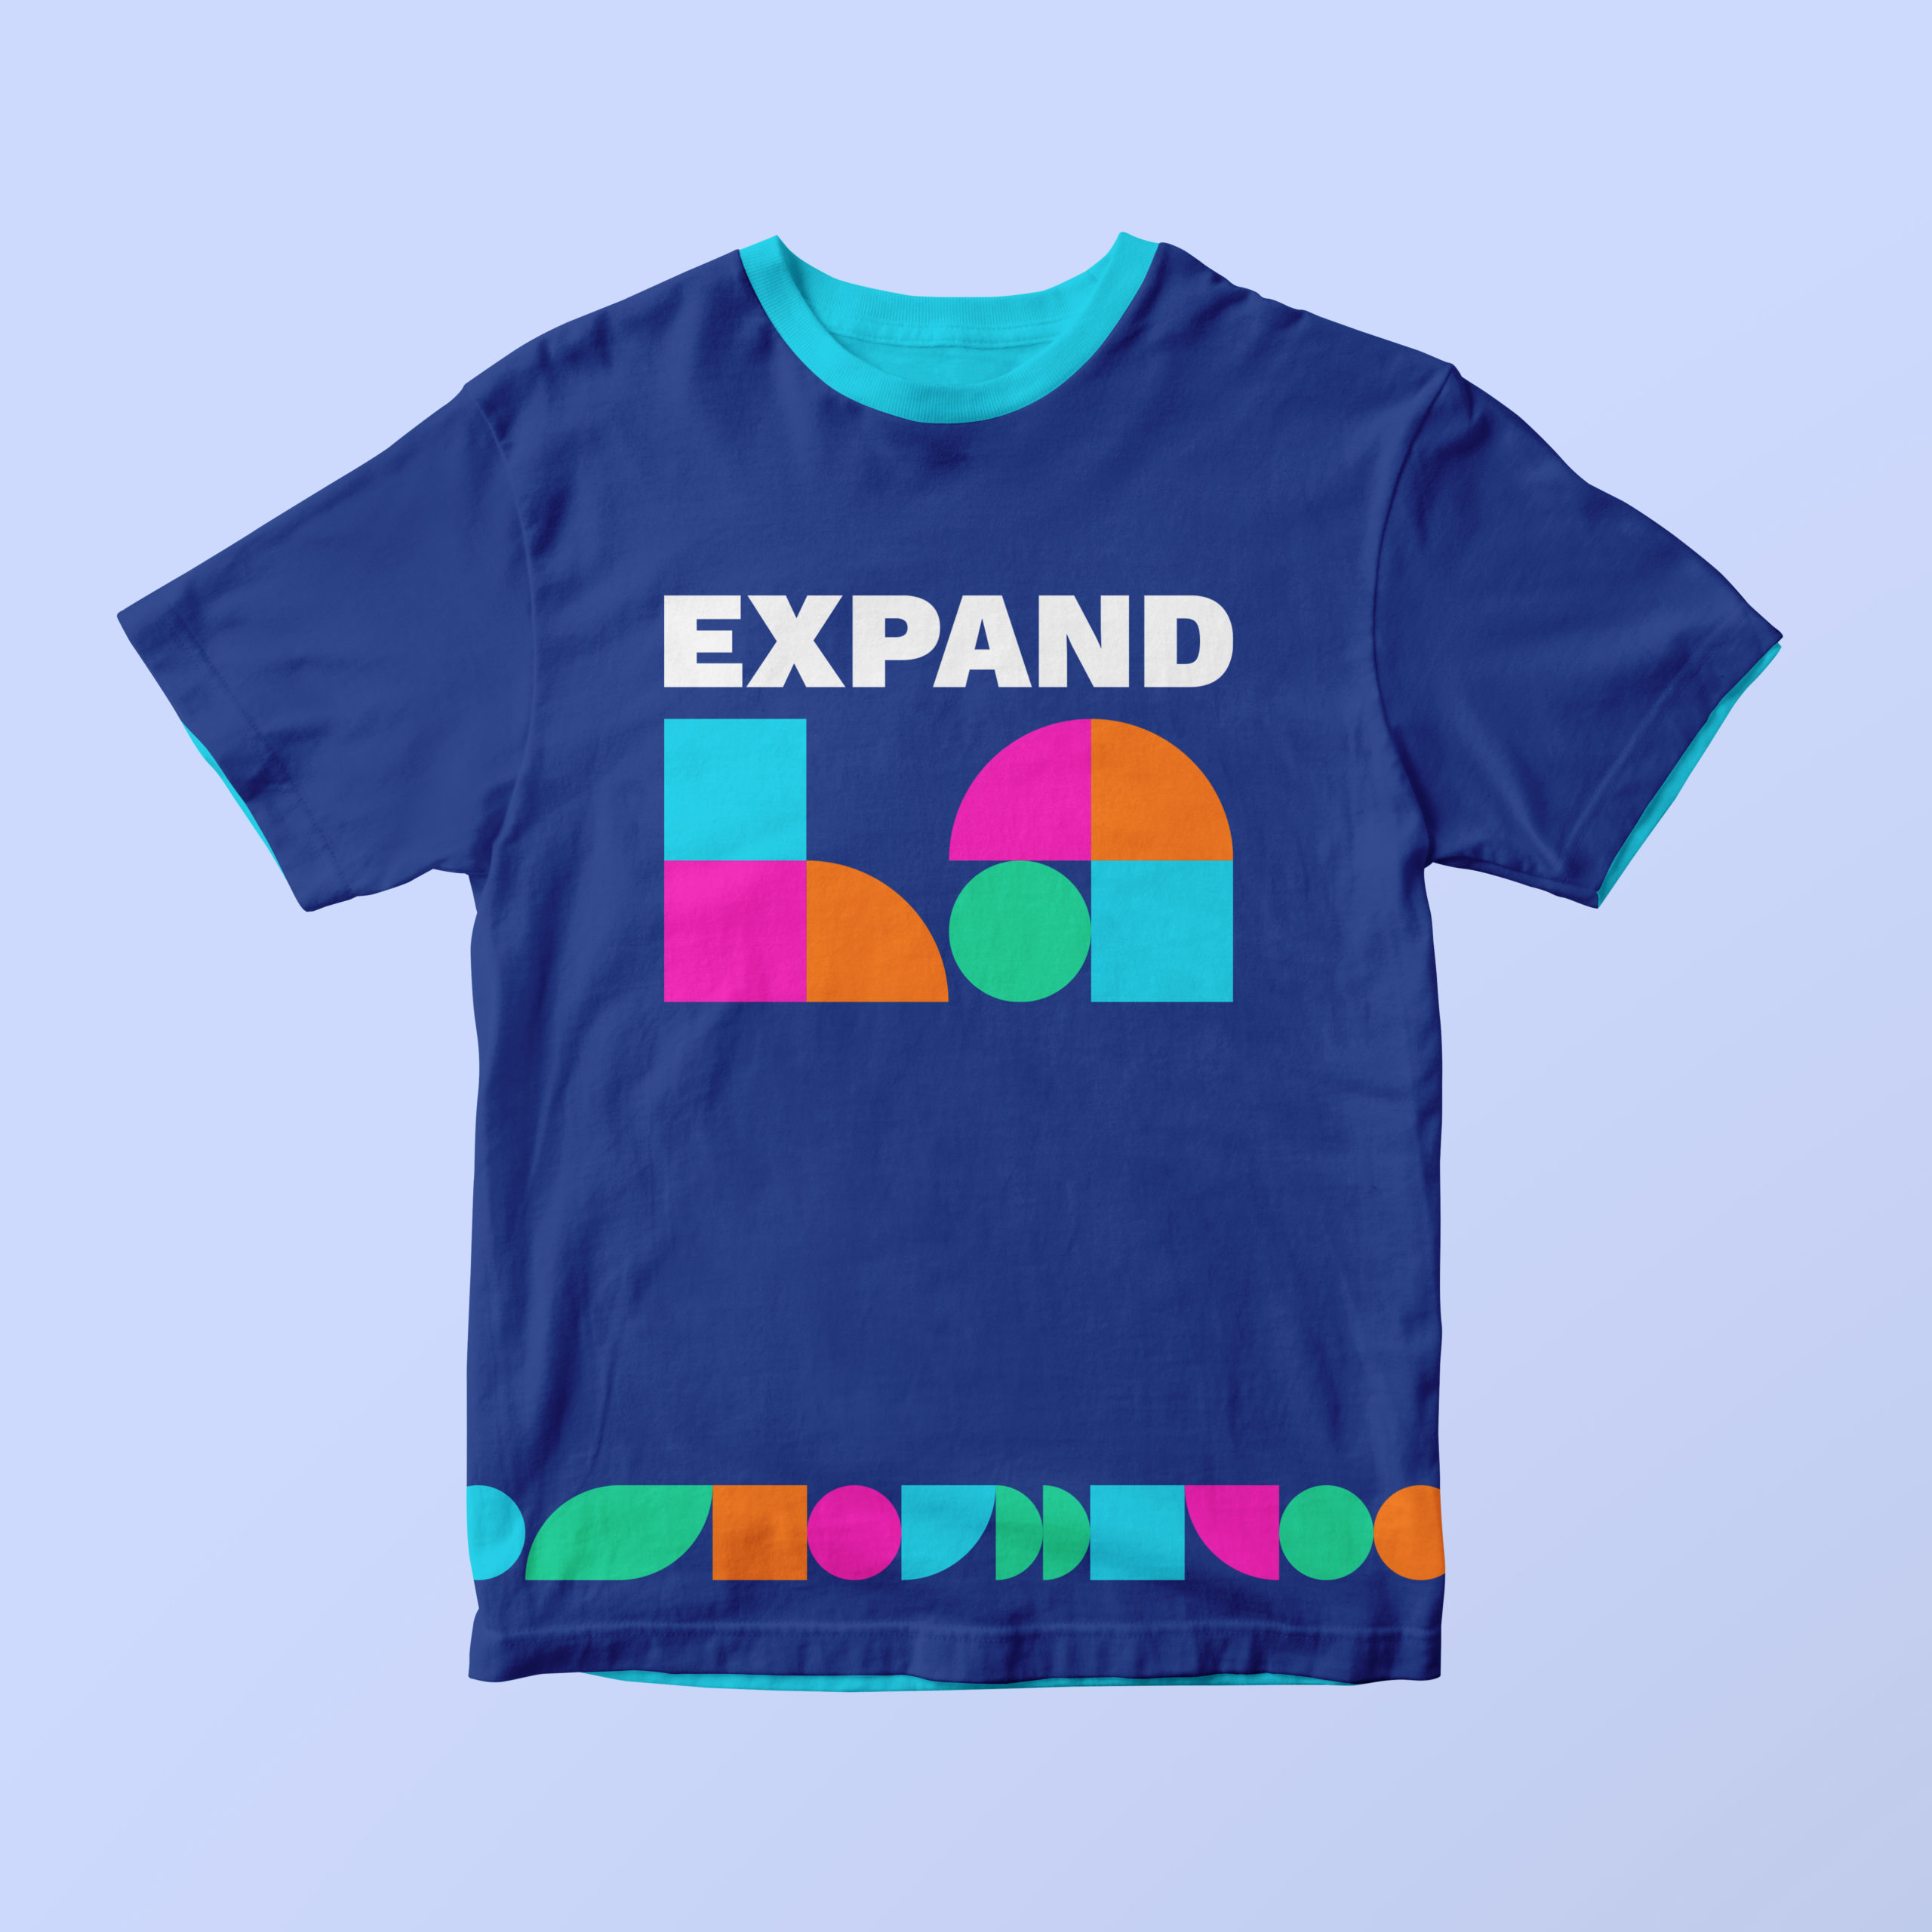 ExpandLA T-Shirt designed by Kilter